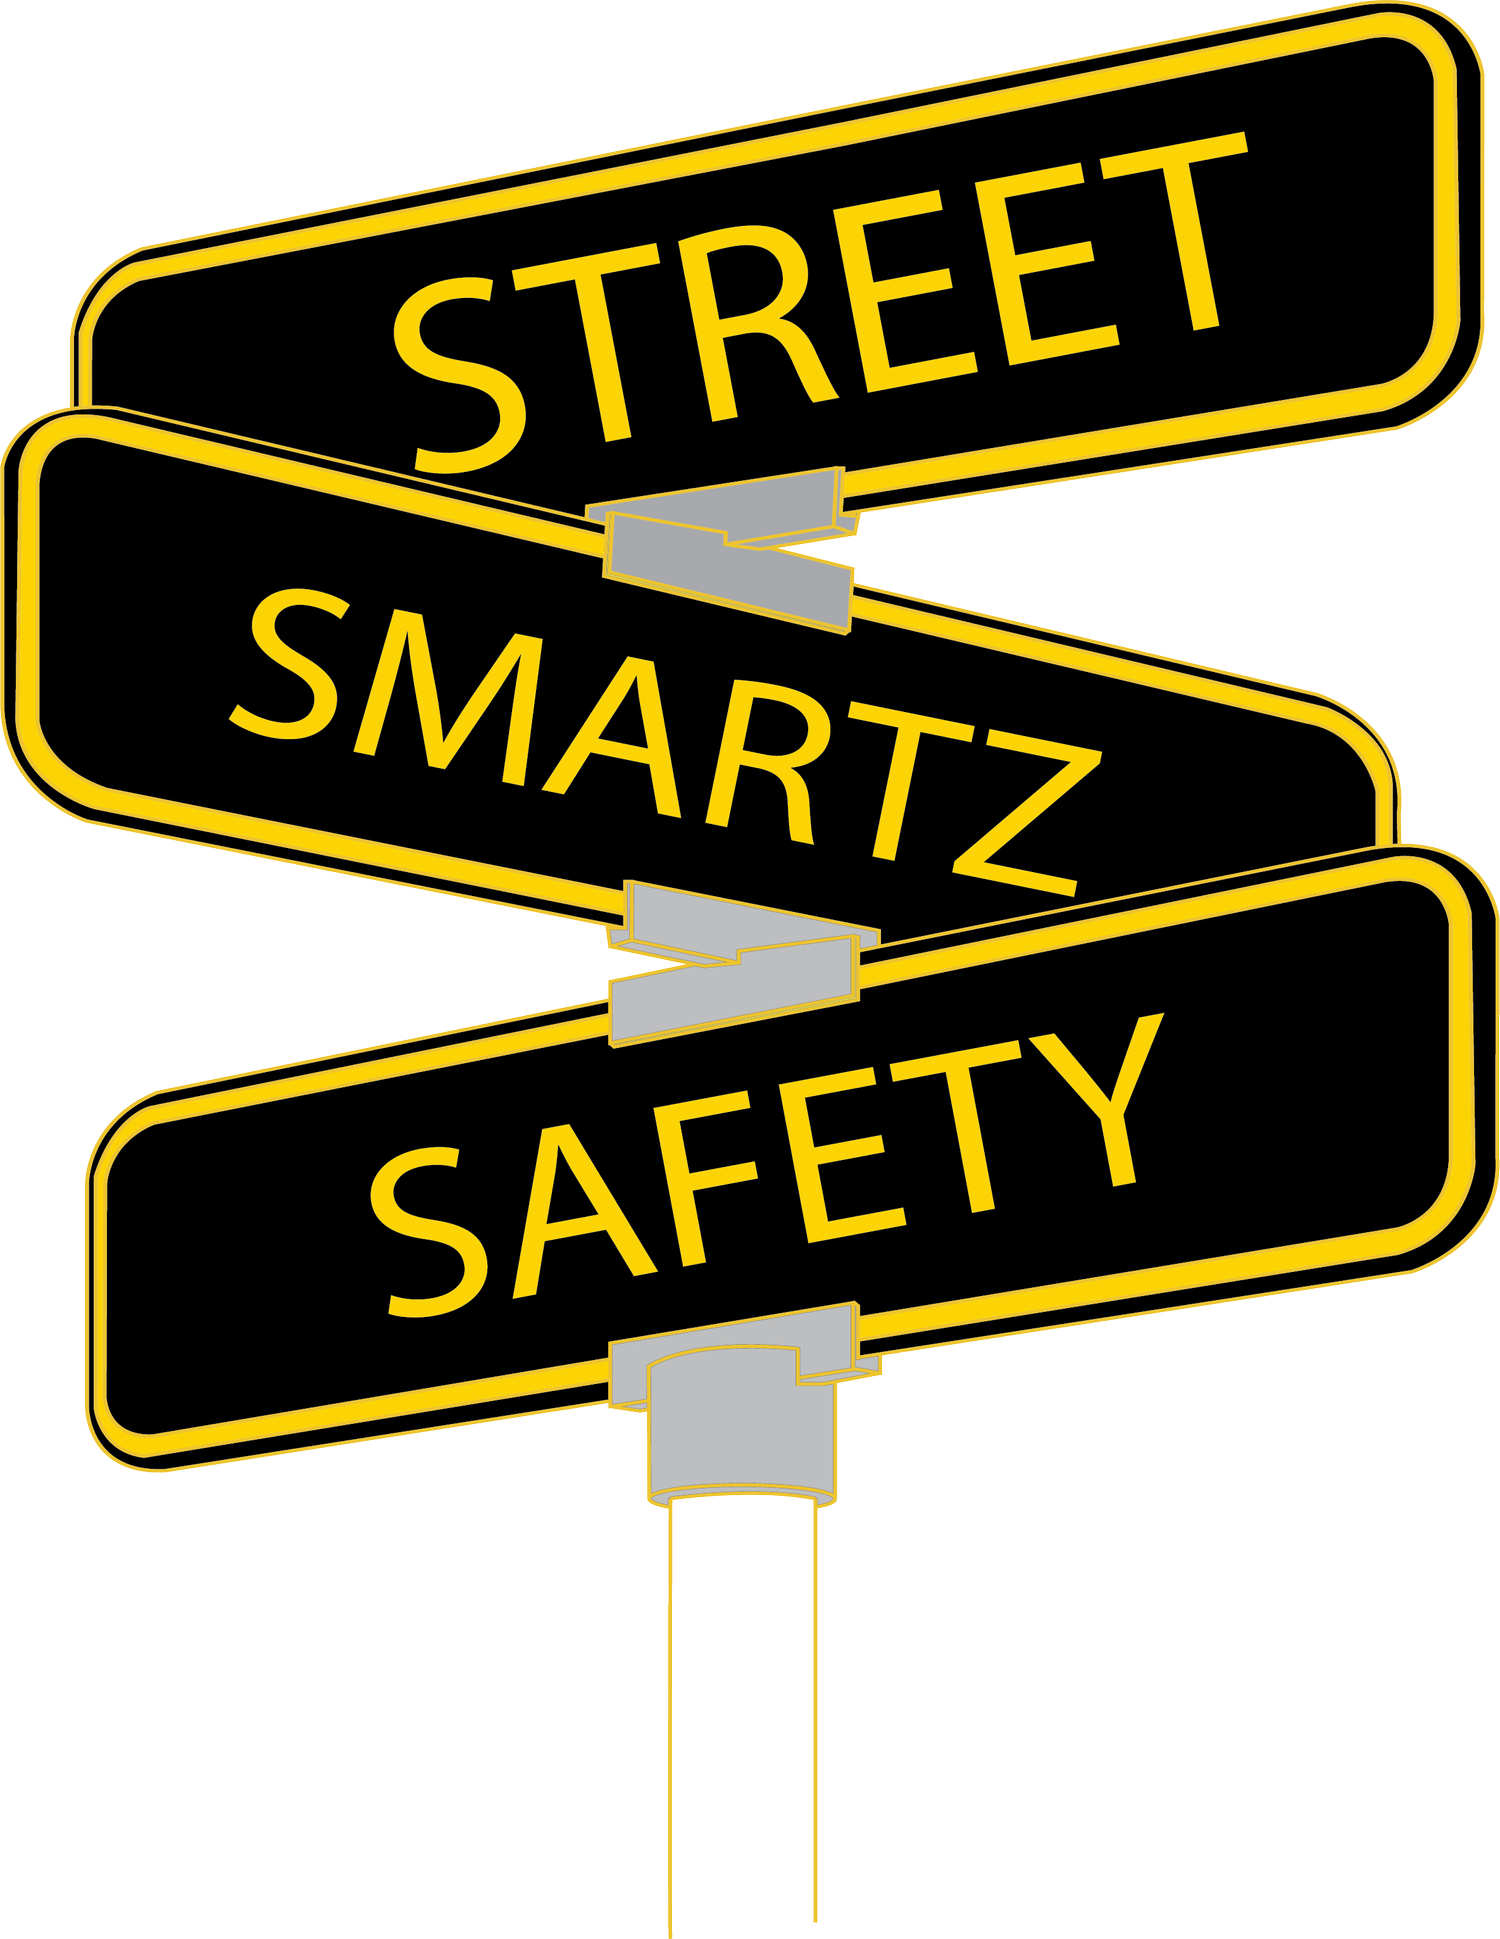 Street Smartz Over Safety